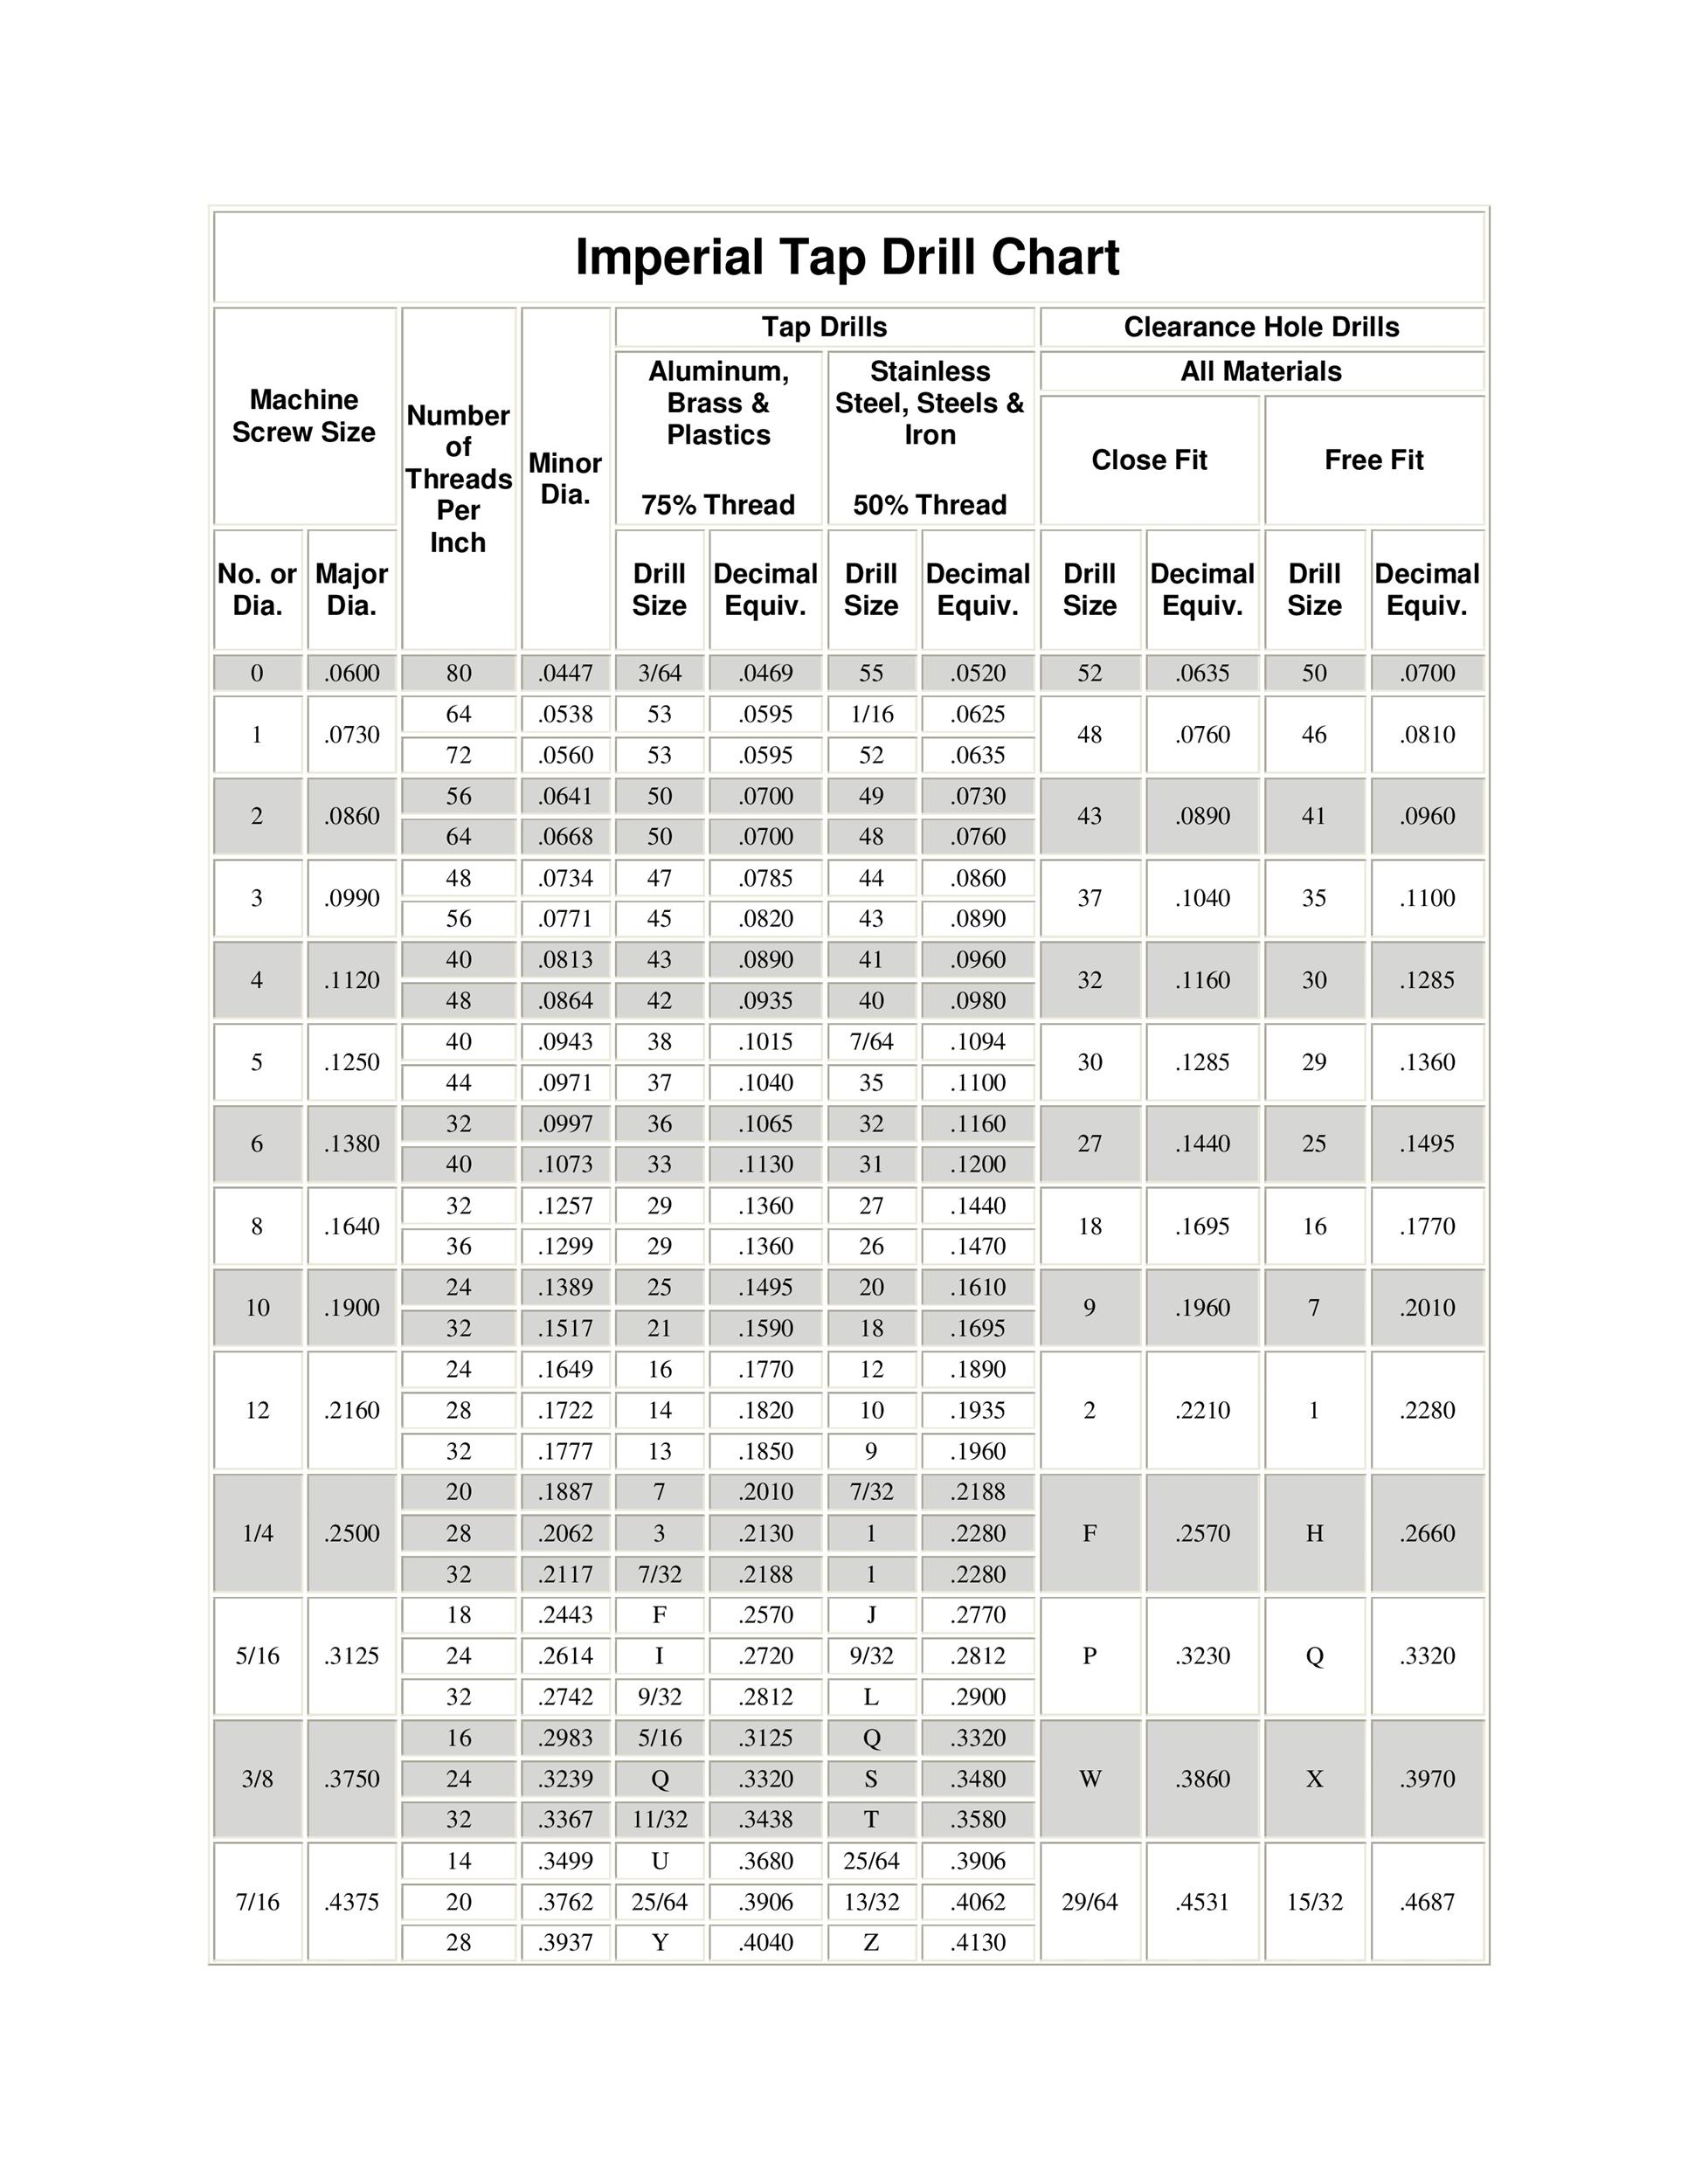 23 Printable Tap Drill Charts [PDF] ᐅ TemplateLab